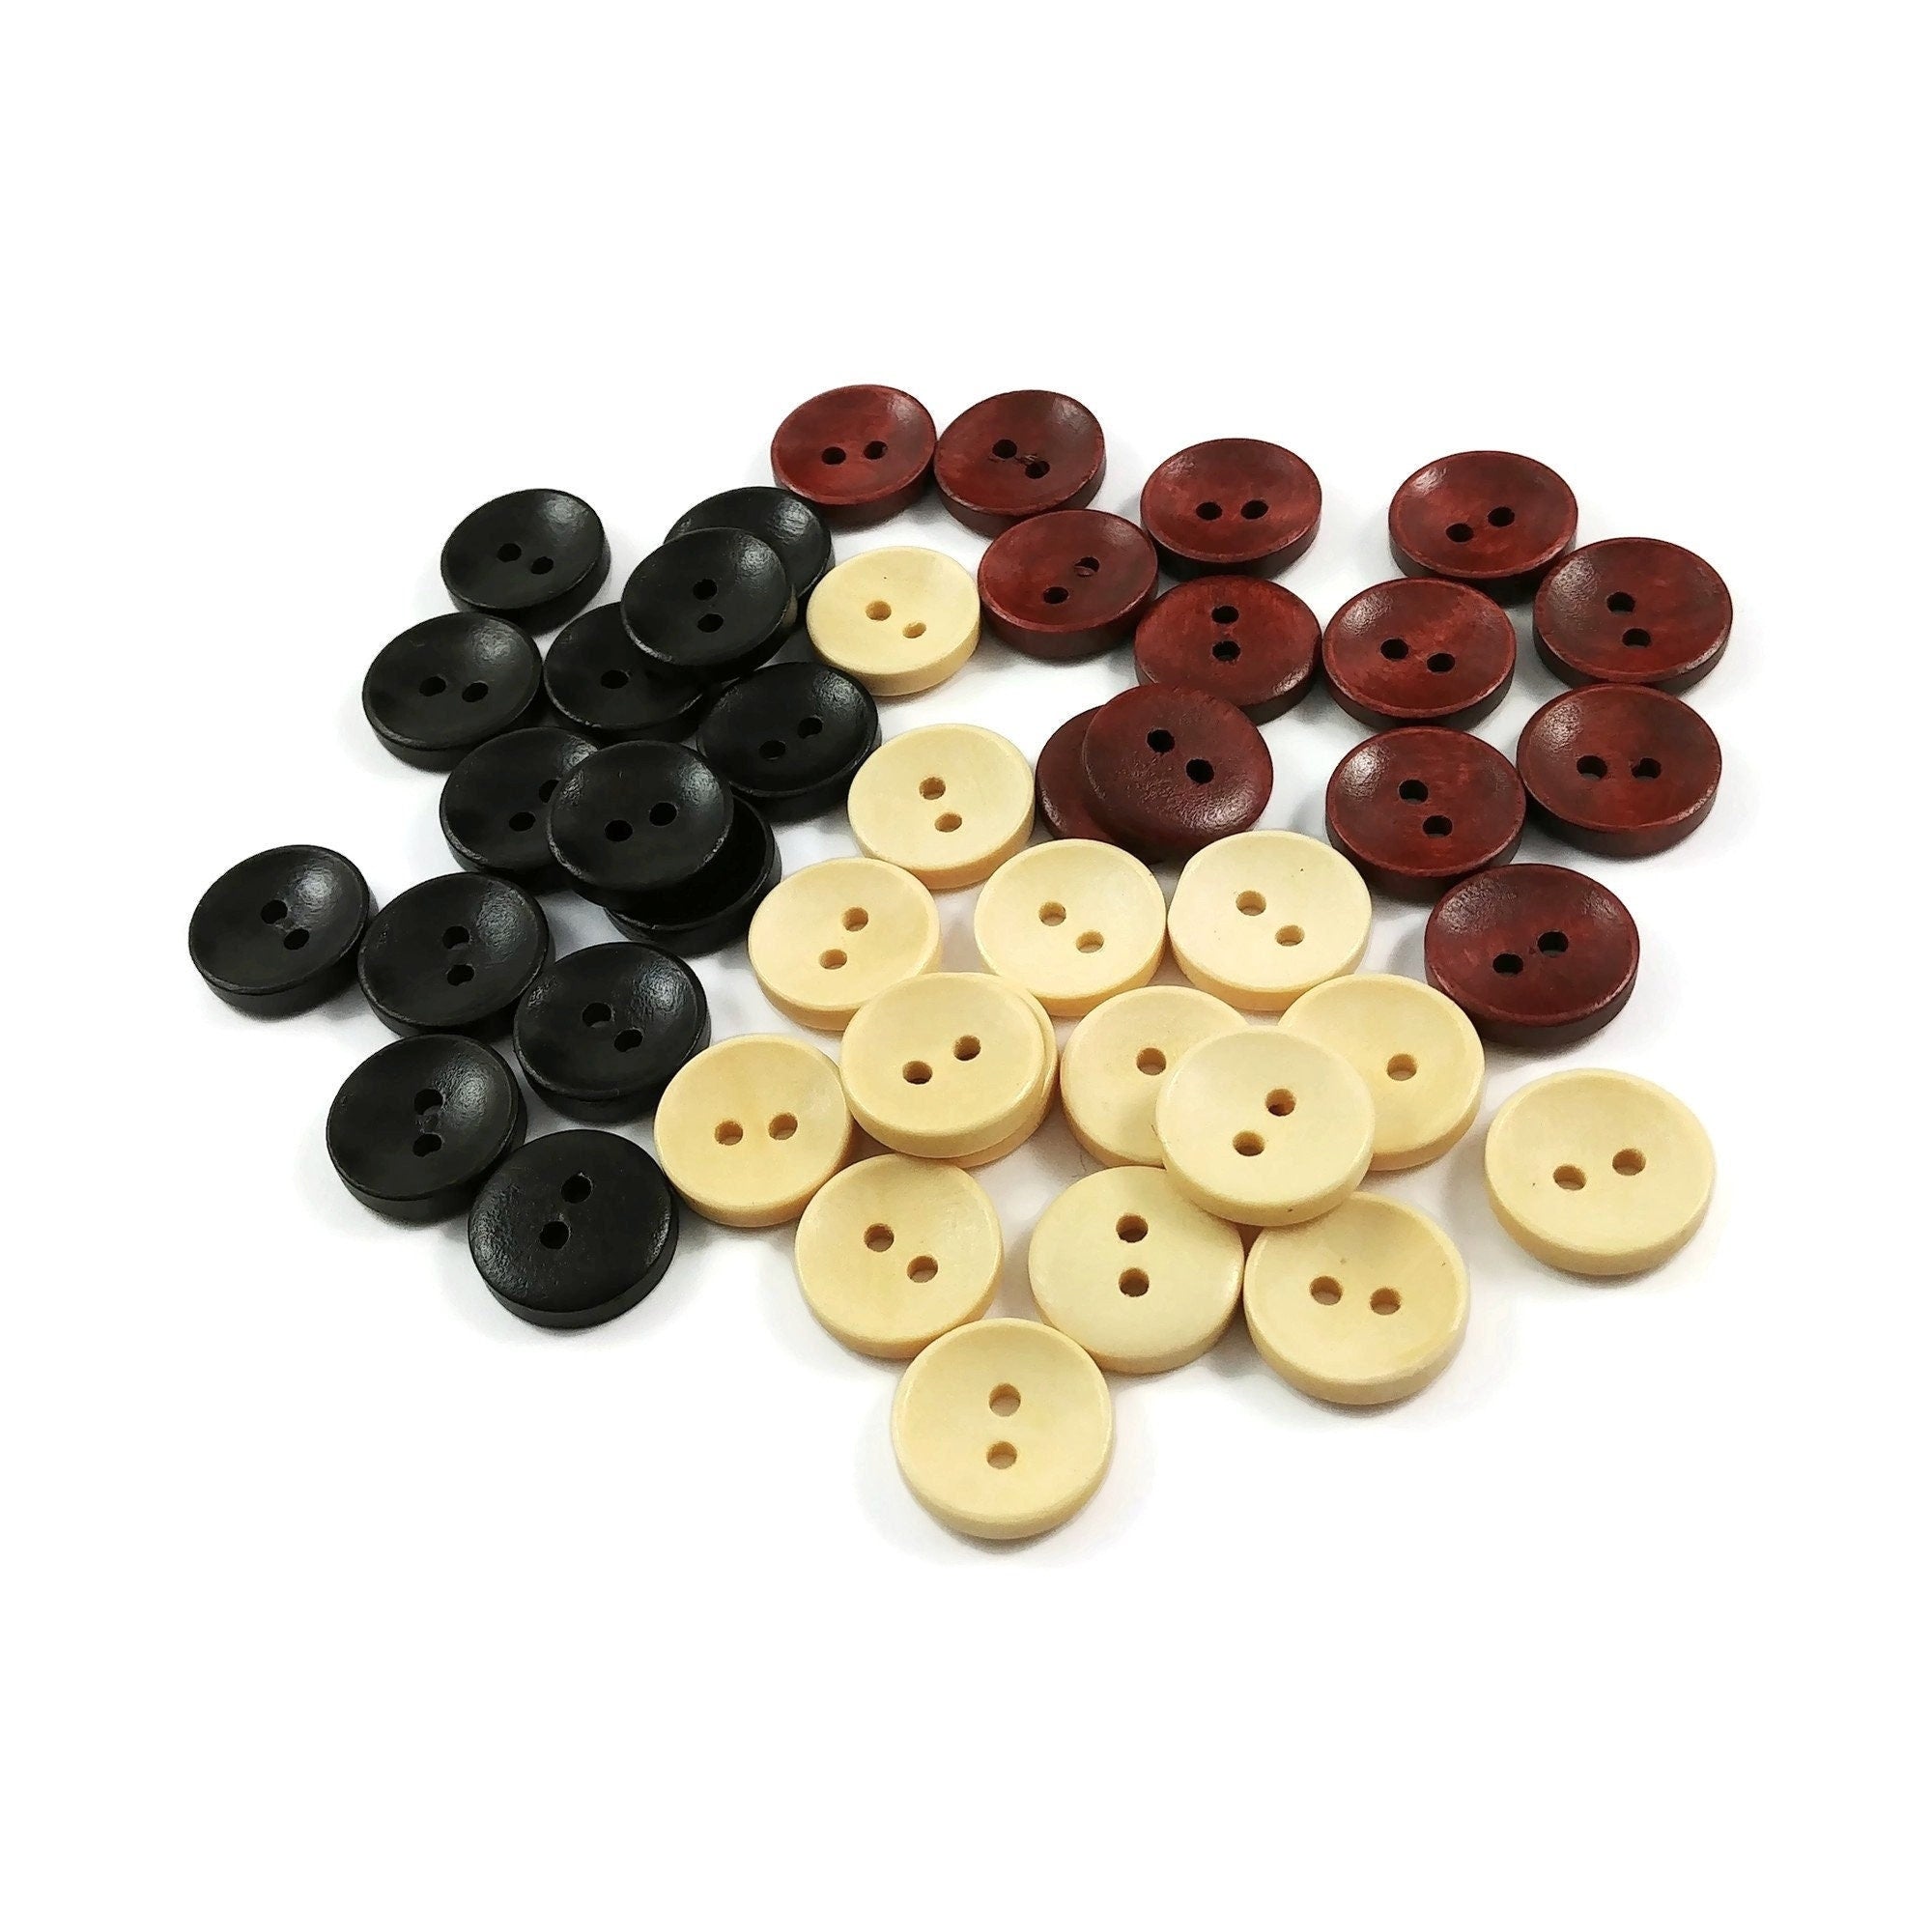 15mm wooden buttons, 6 sewing buttons, Natural wood button, Dark brown craft buttons